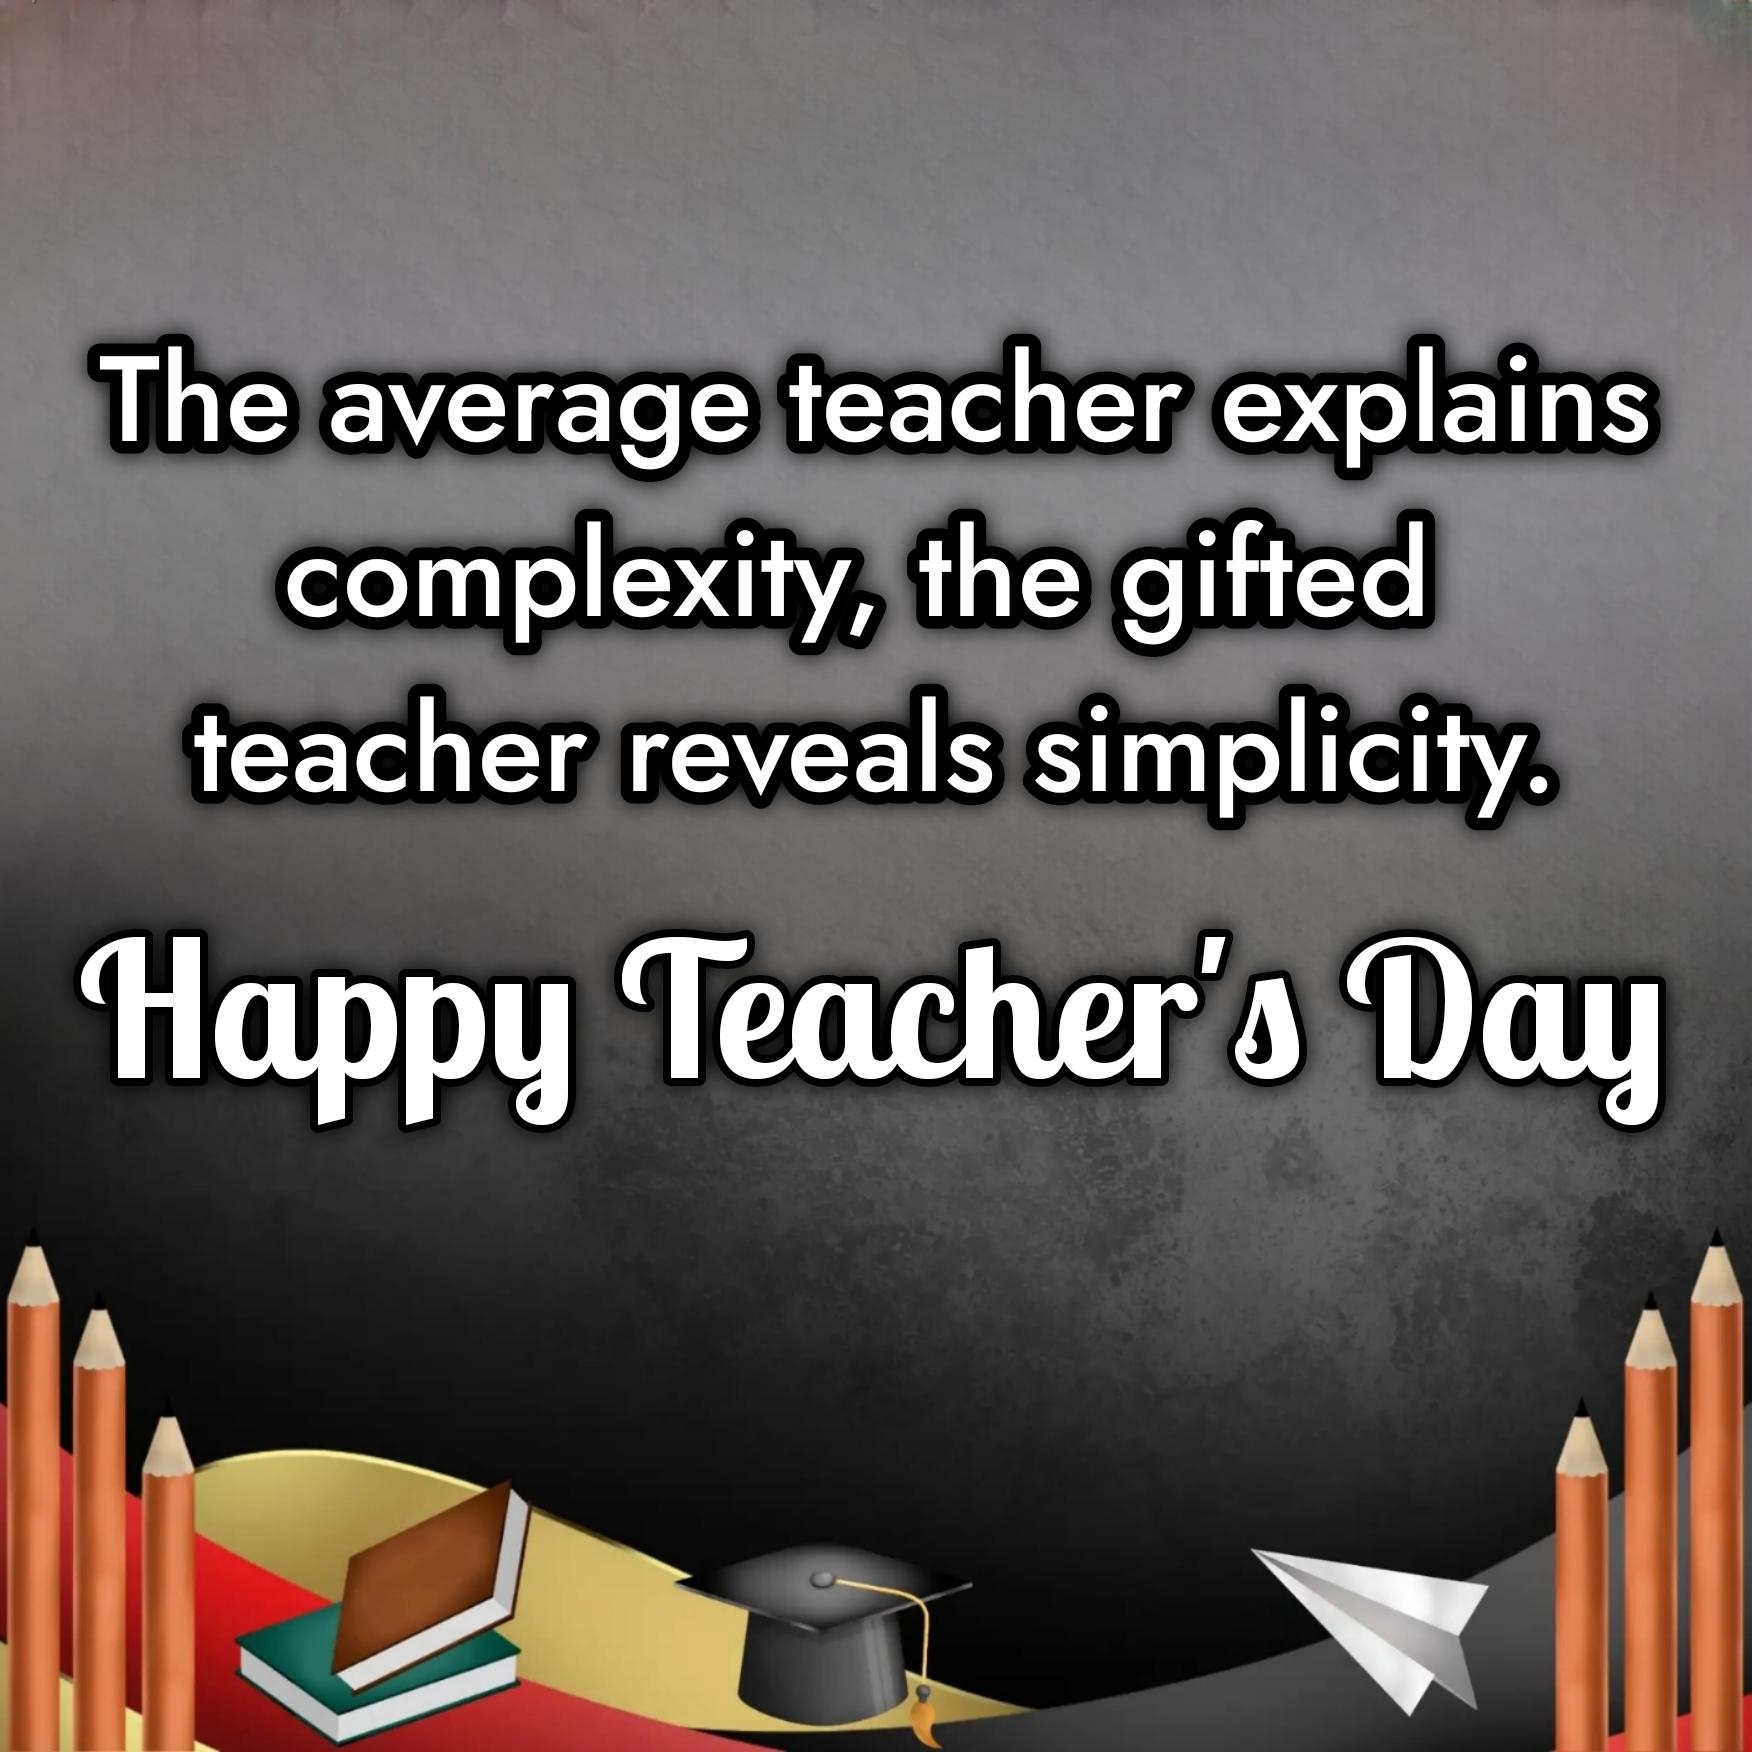 The average teacher explains complexity